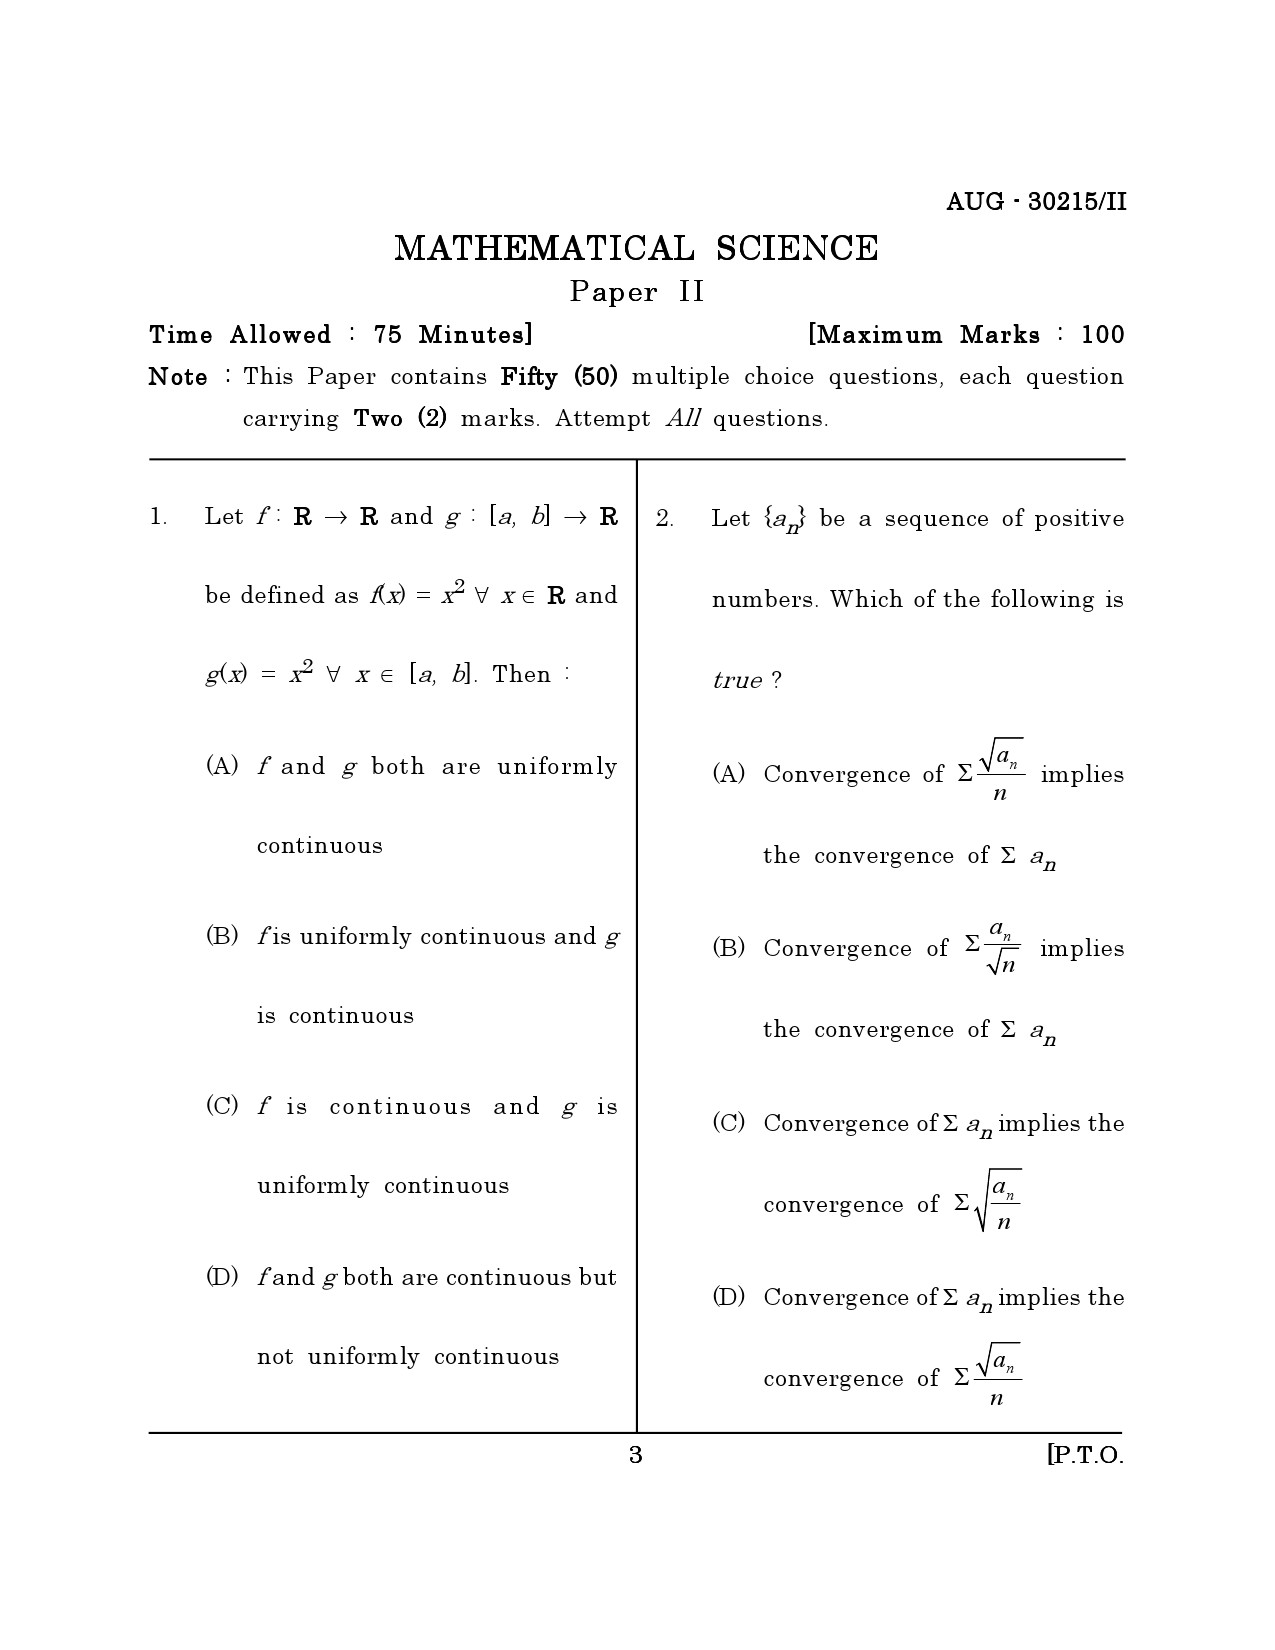 Maharashtra SET Mathematical Sciences Question Paper II August 2015 2